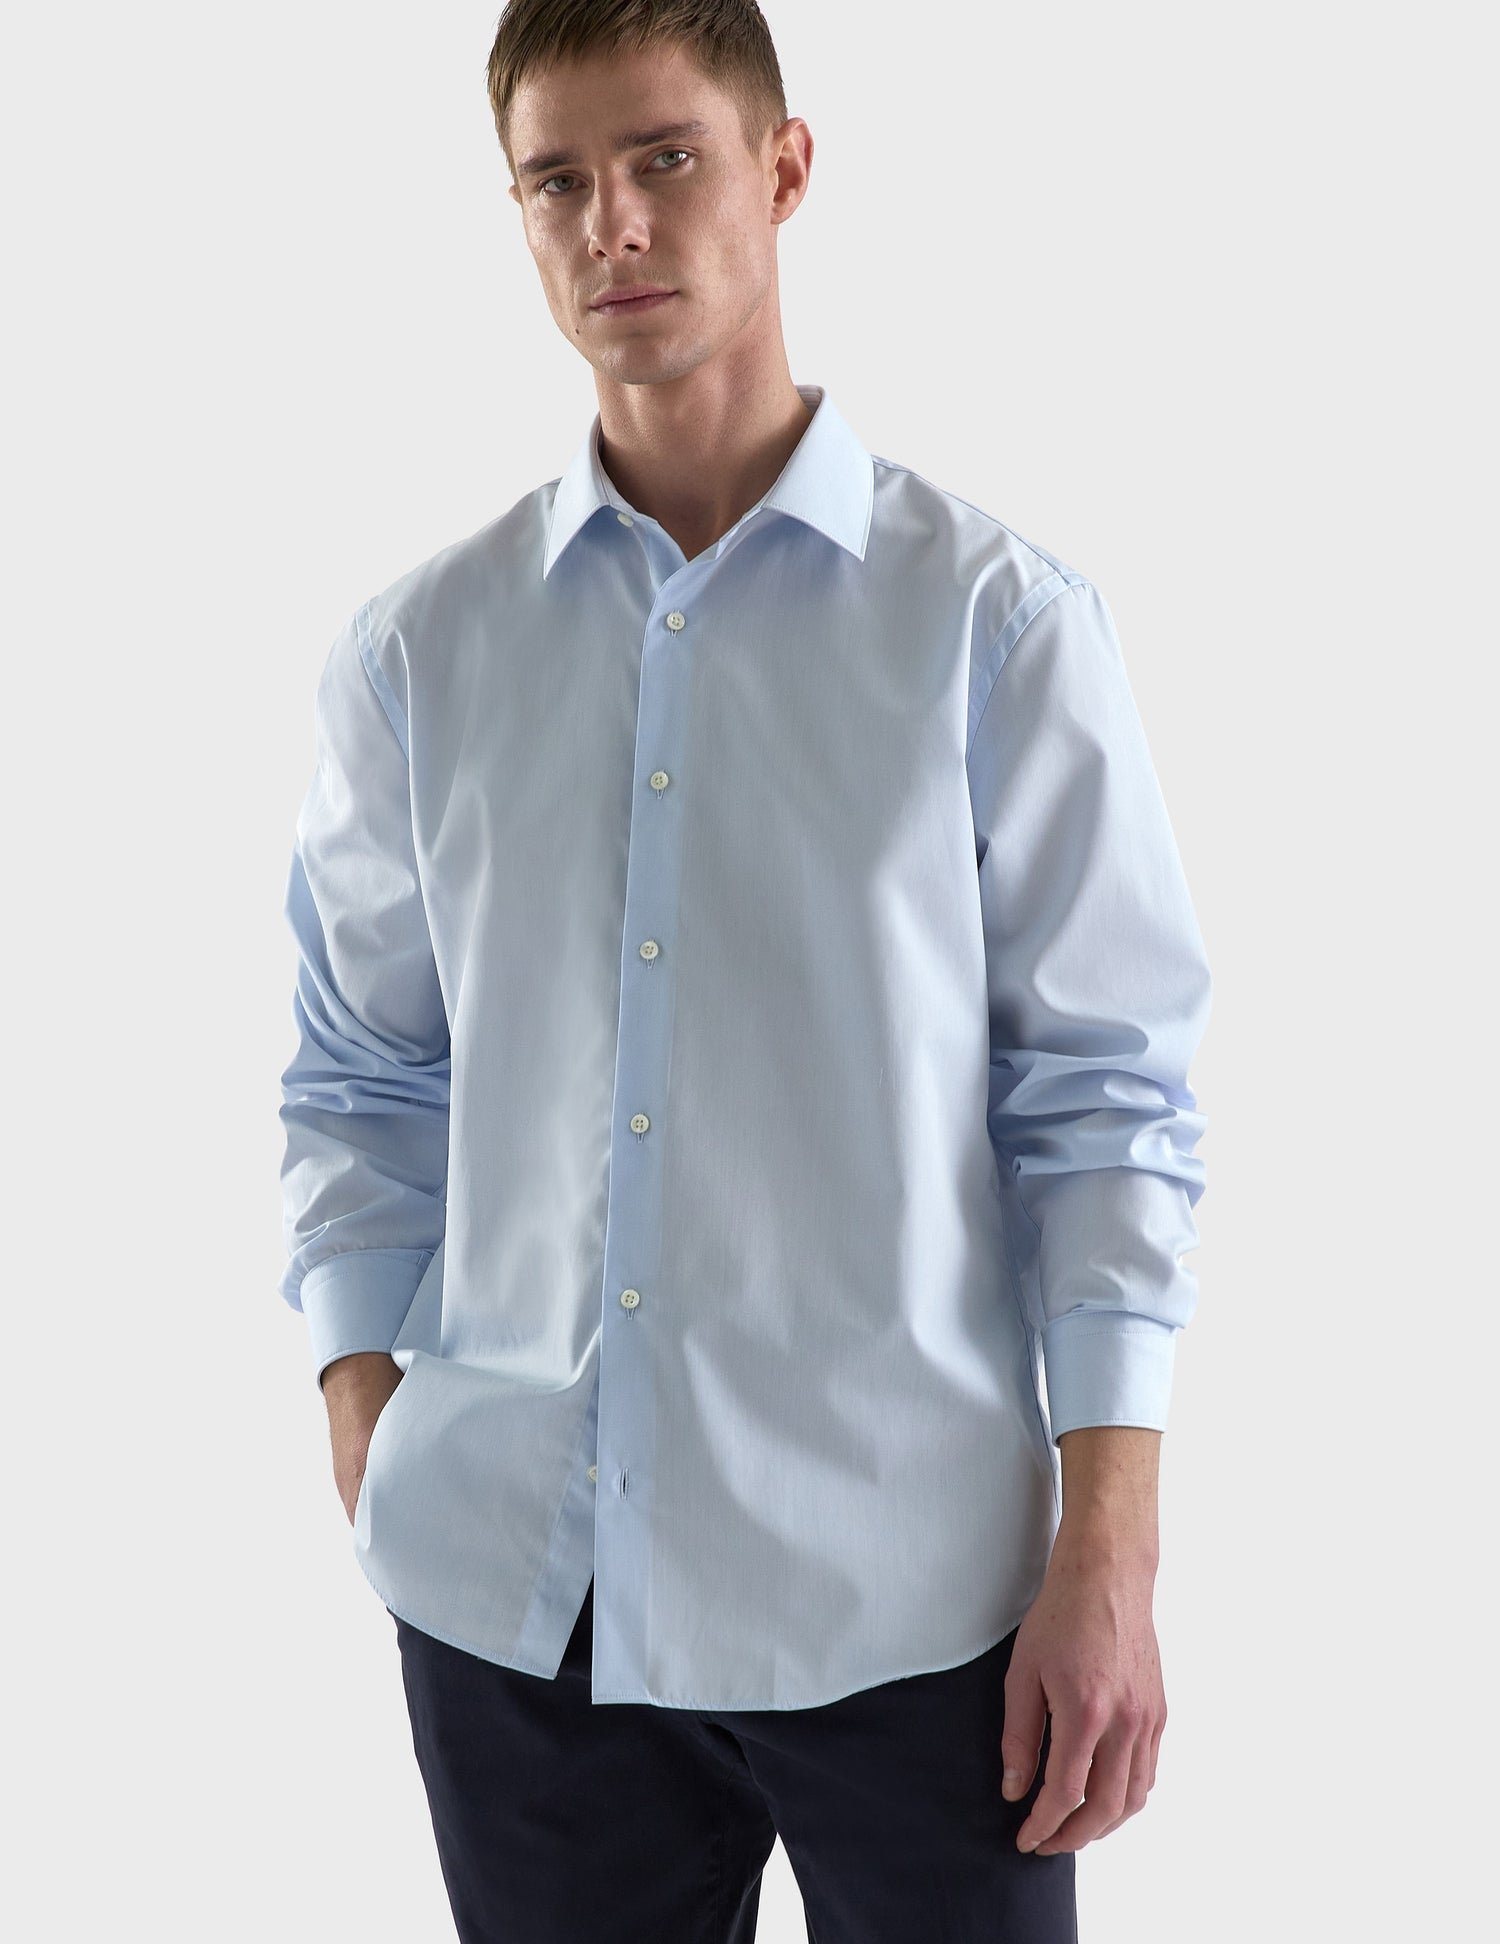 Semi-fitted wrinkle-free blue shirt - Poplin - Figaret Collar#3